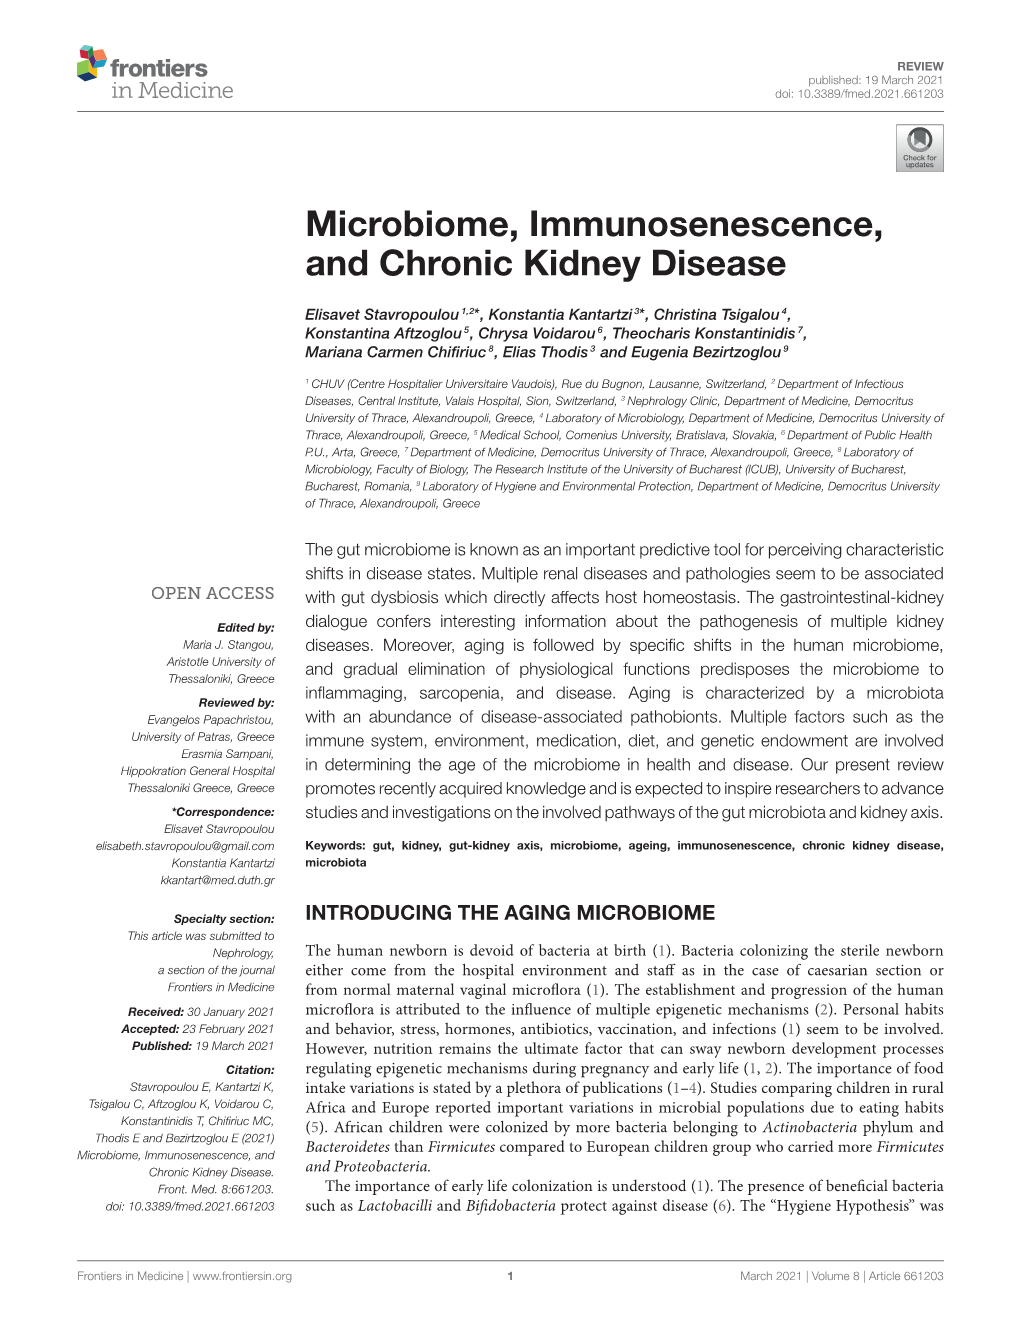 Microbiome, Immunosenescence, and Chronic Kidney Disease